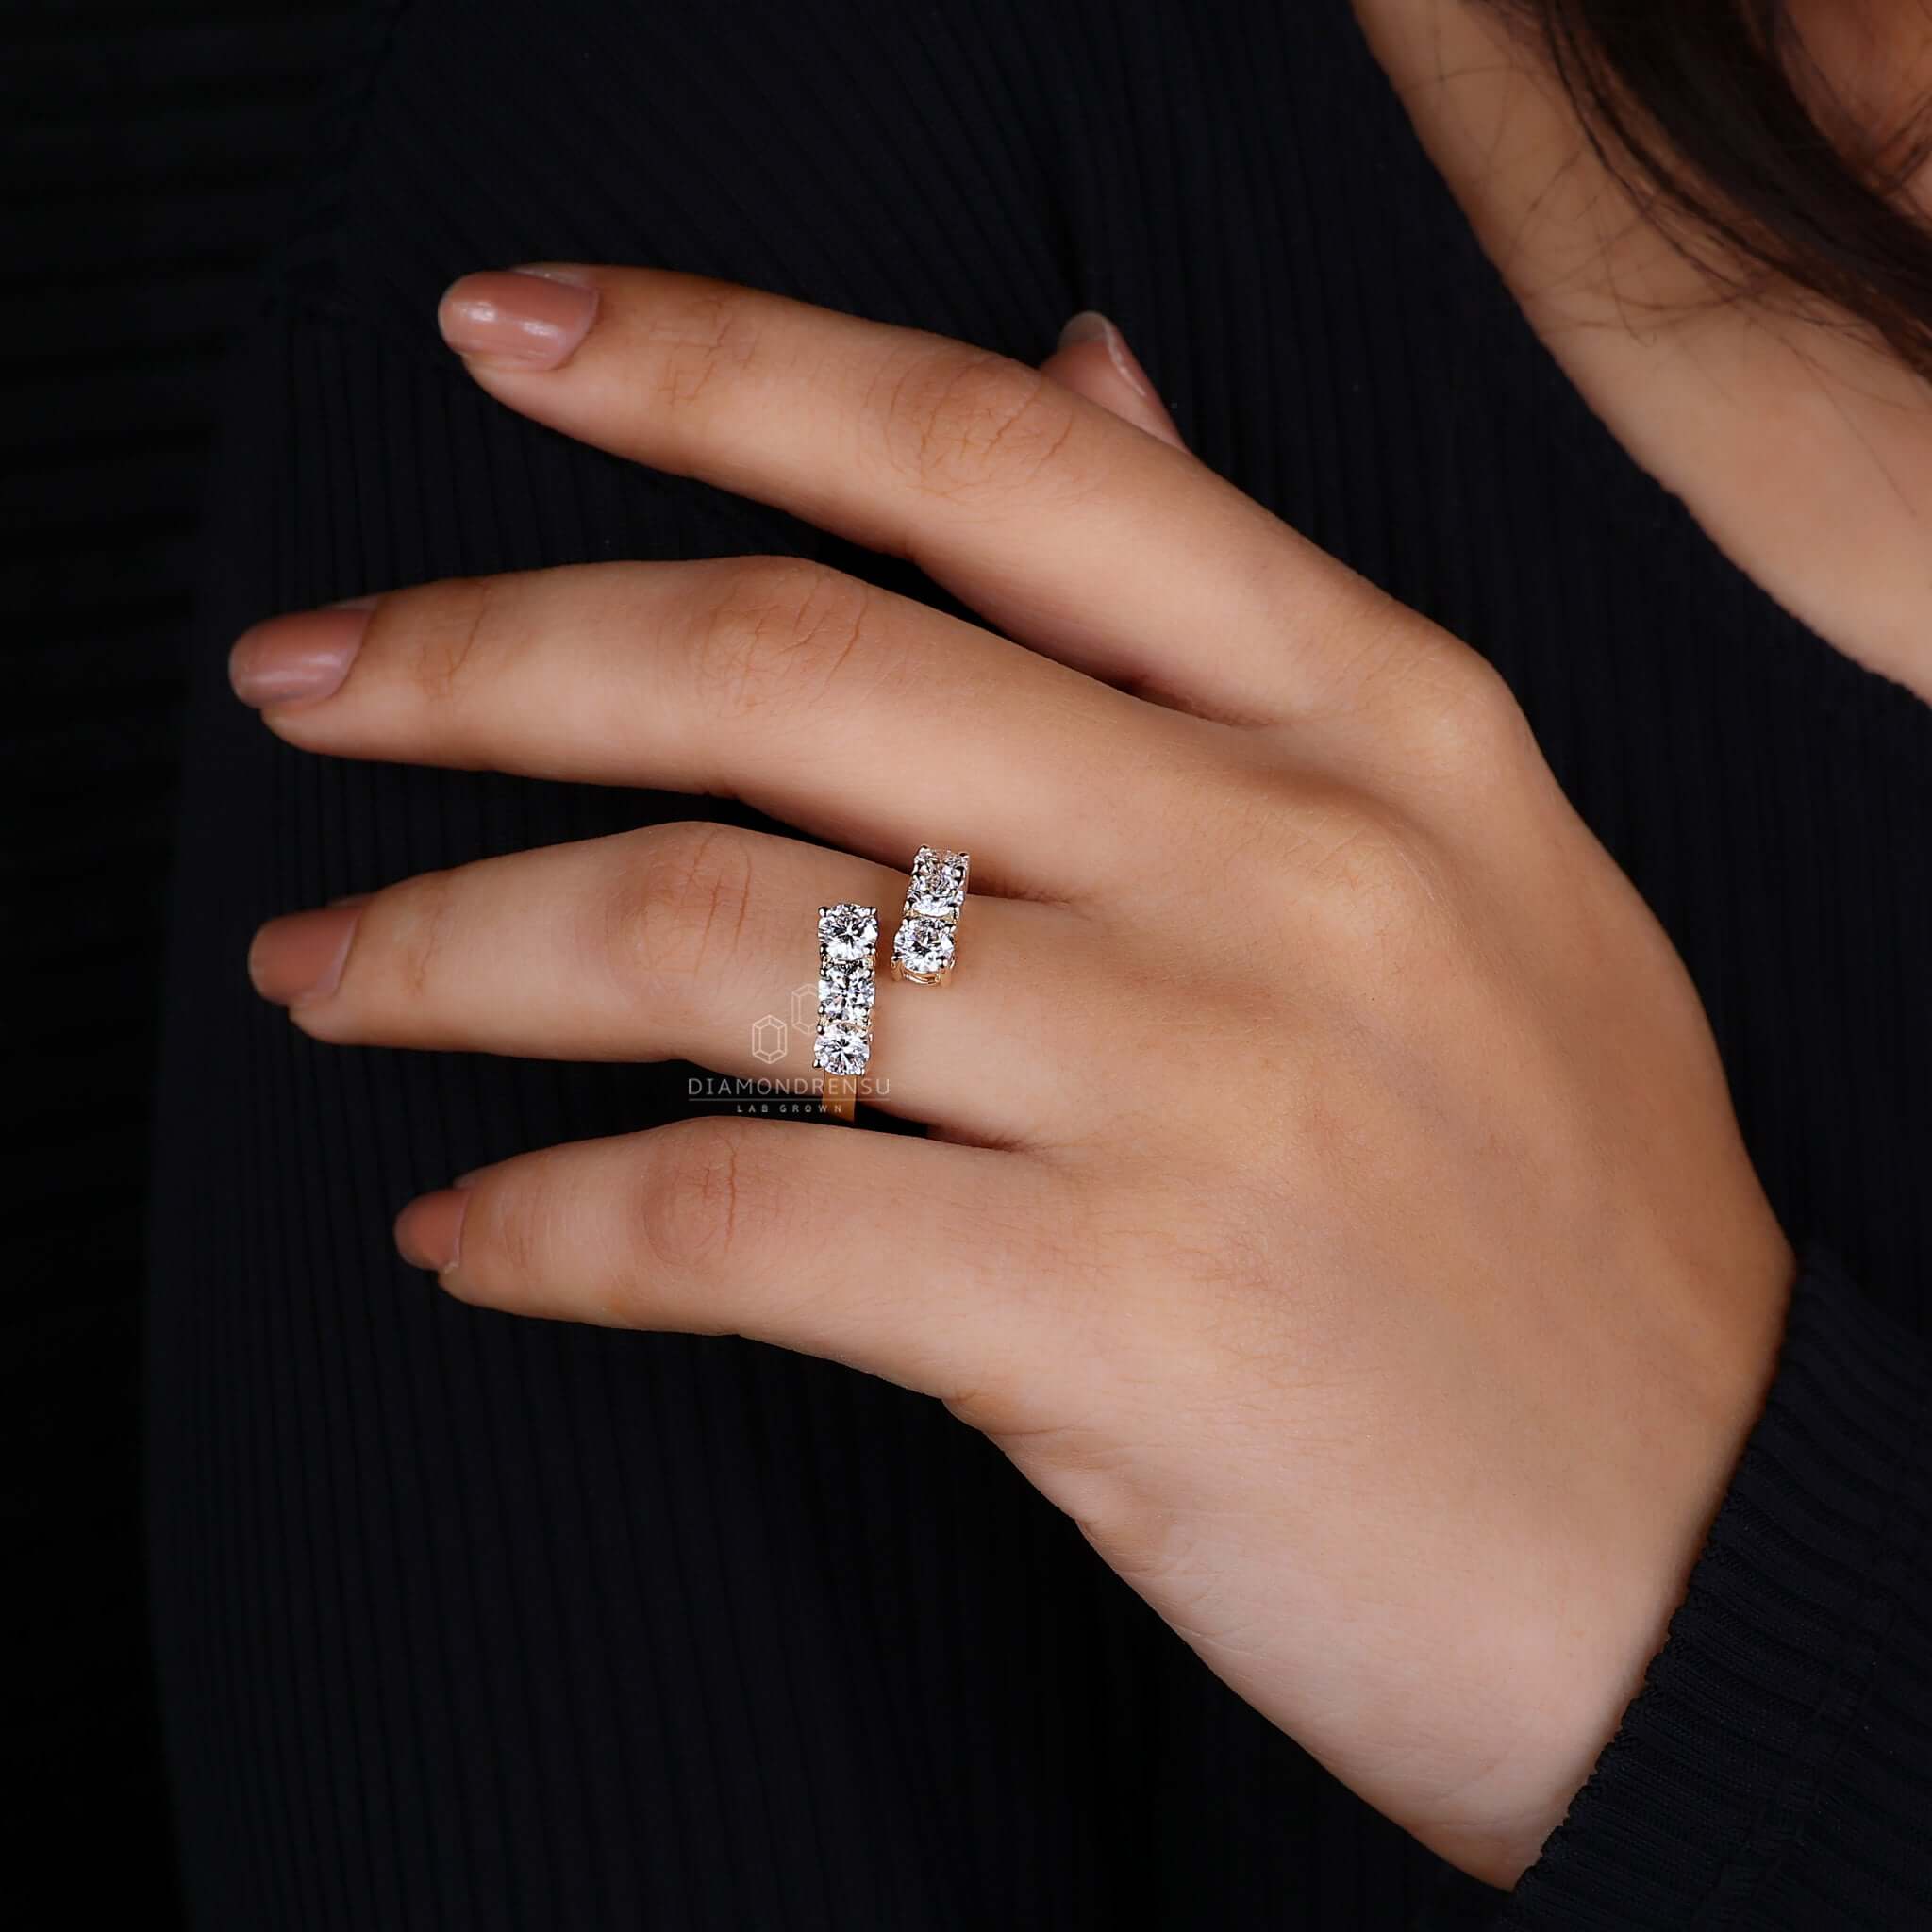 Sophisticated round cut diamond engagement ring on a velvet cushion, exuding luxury and romance.